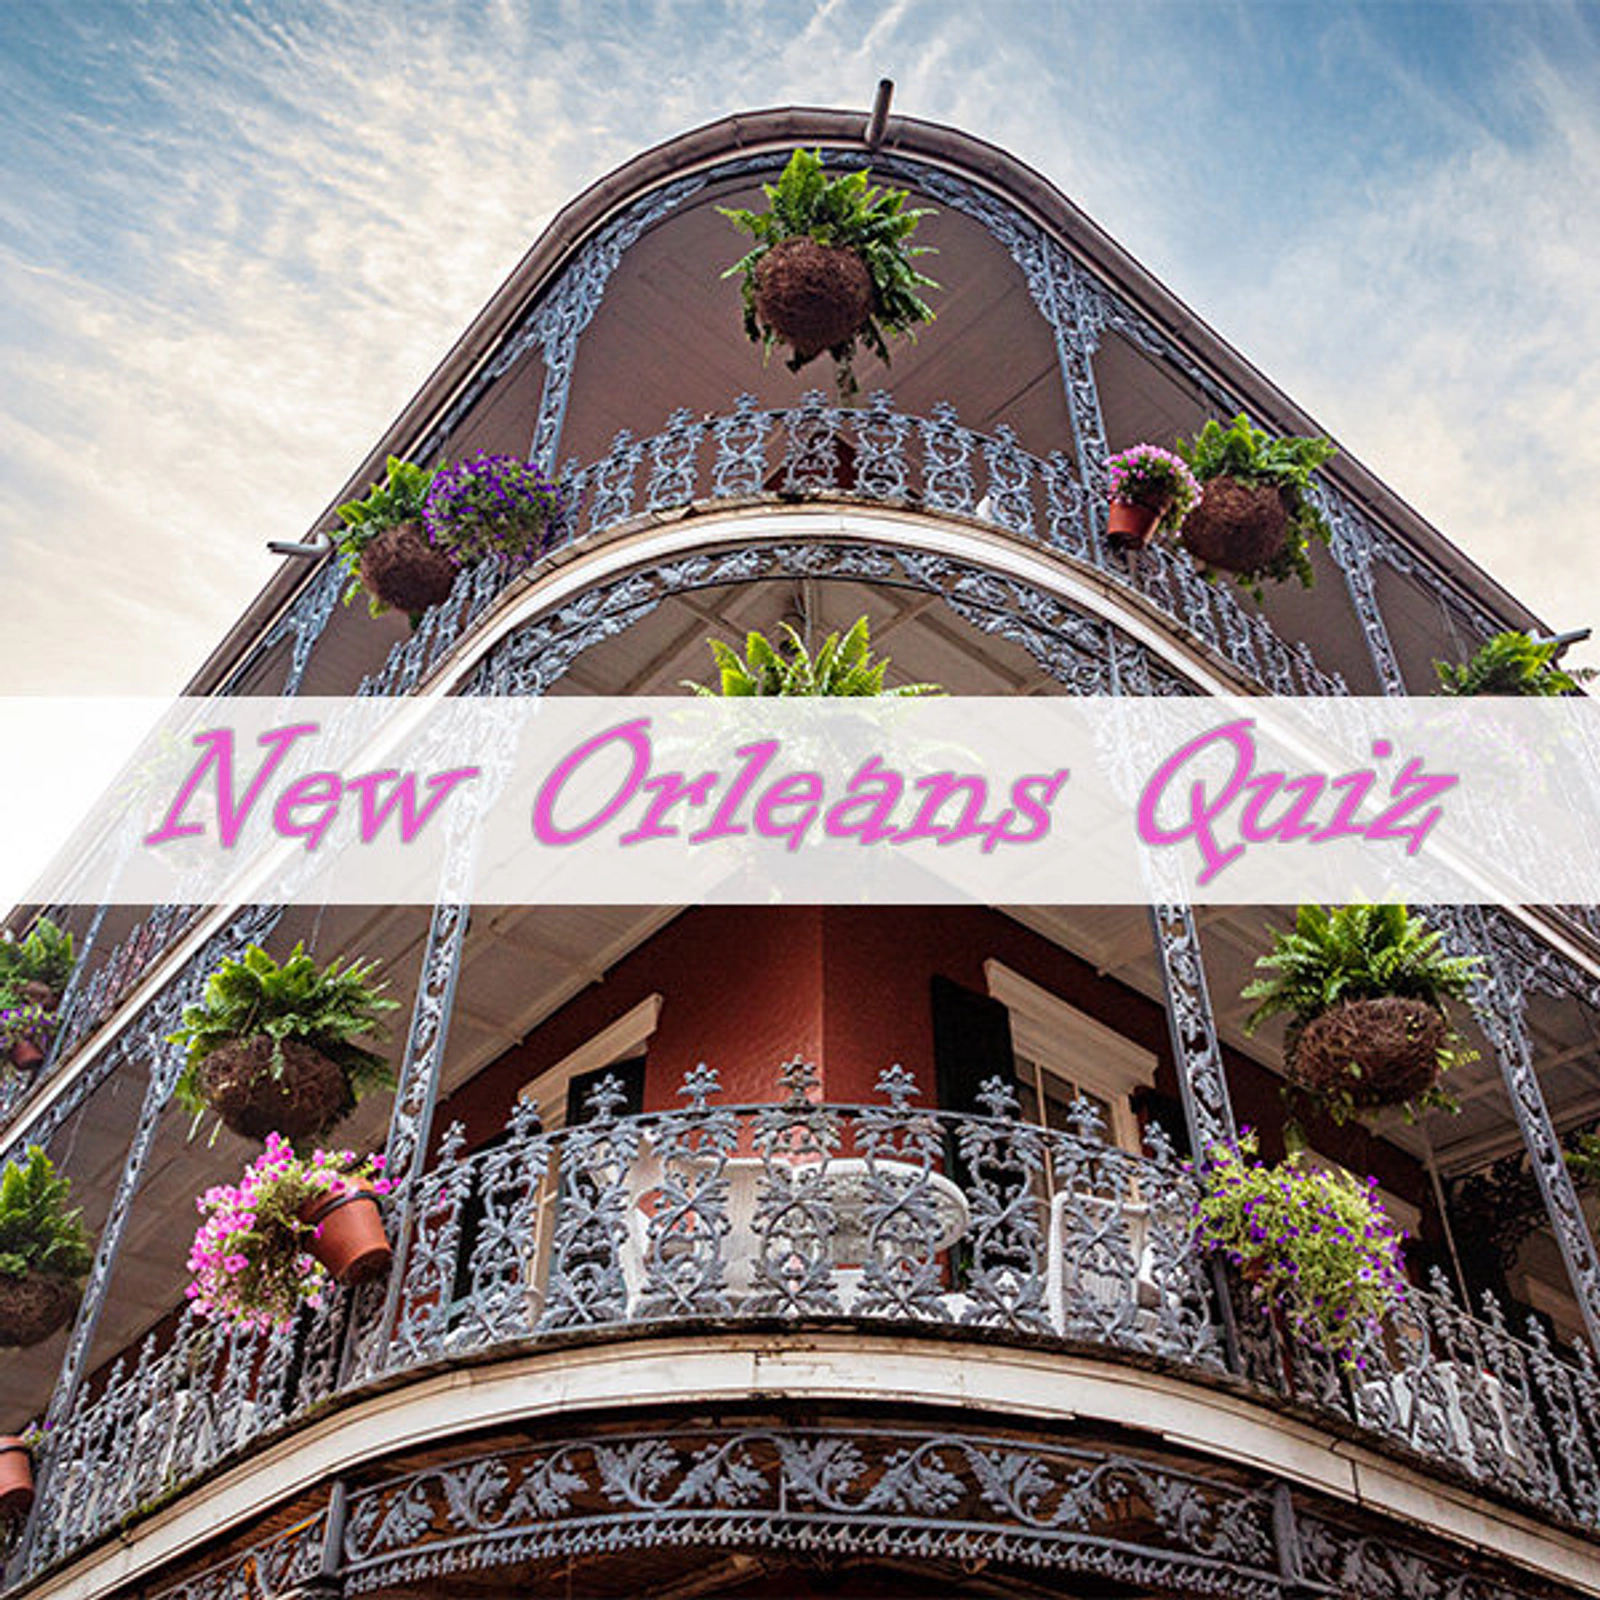 New Orleans Quiz